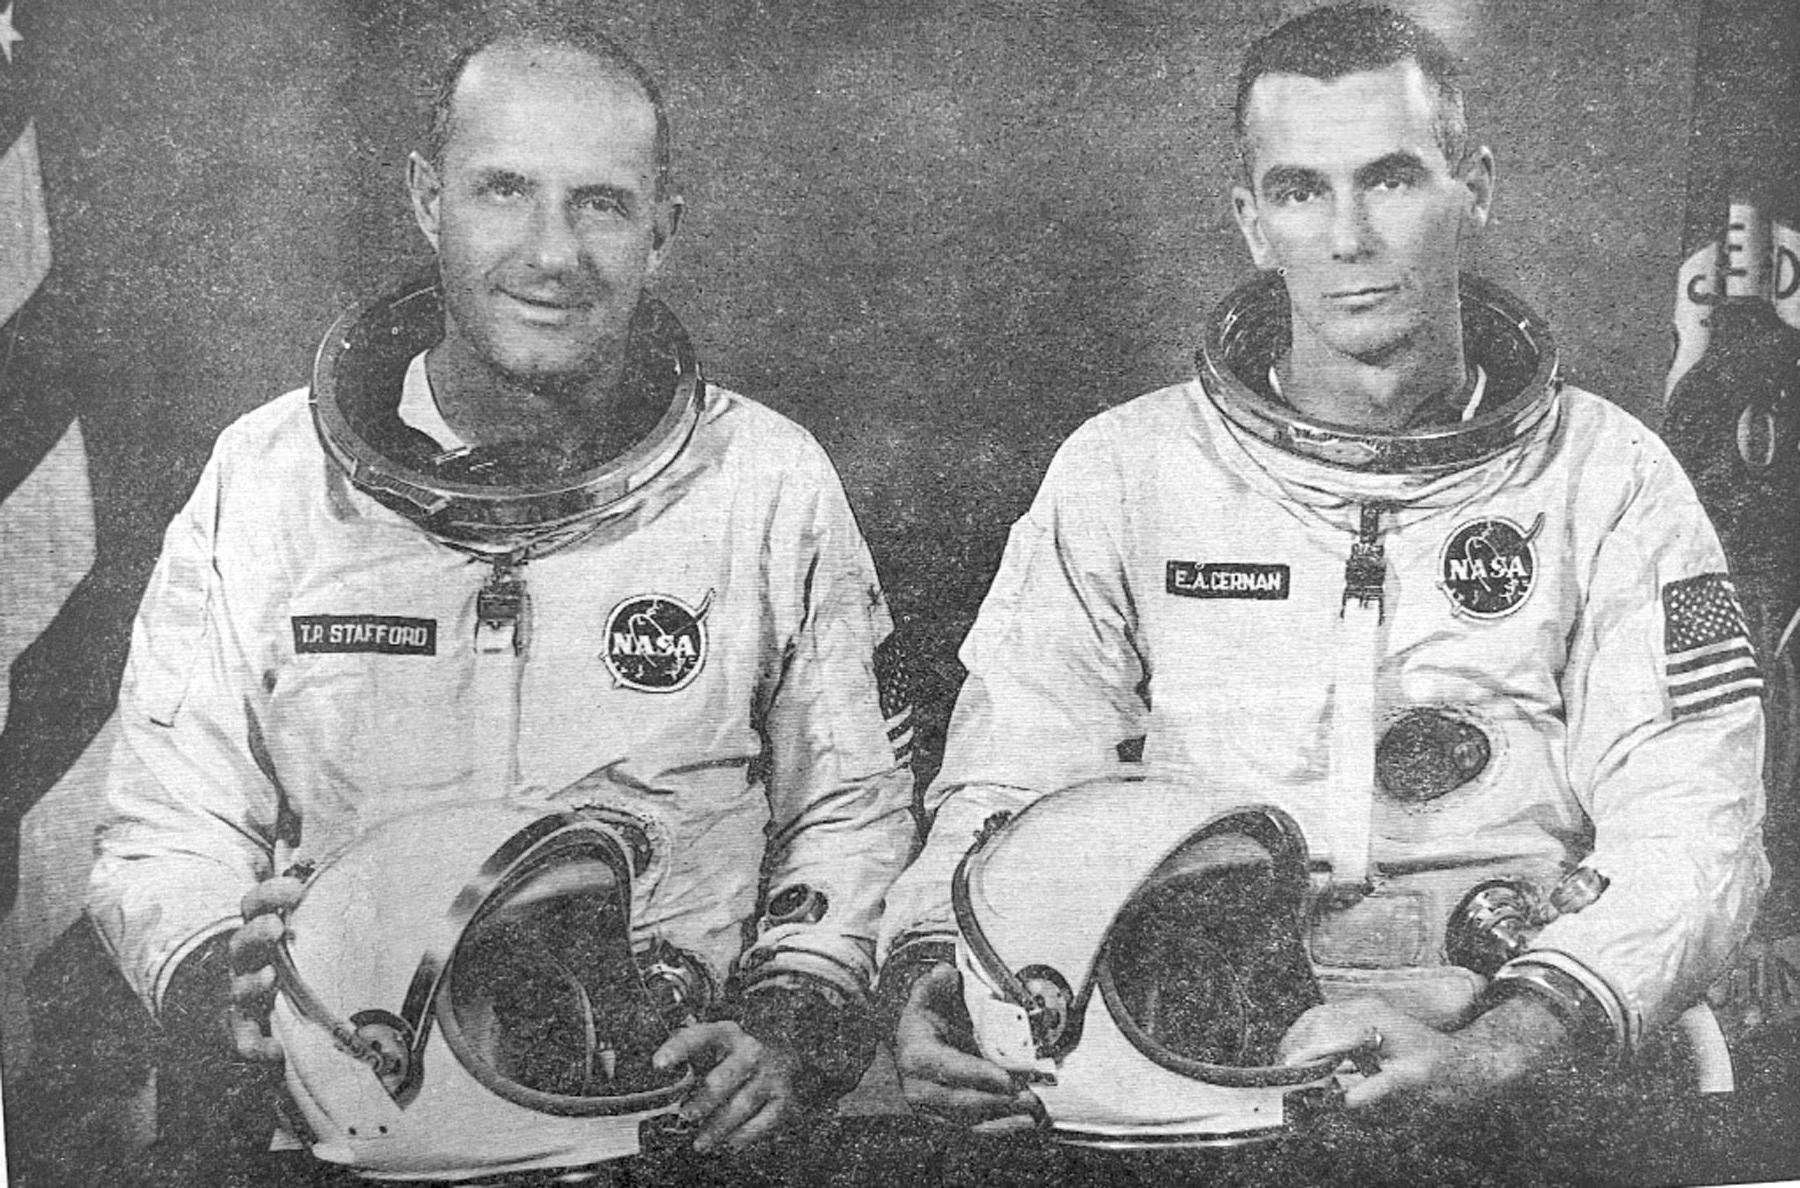 Eugene A. Cernan, right, and Gen. Tom Stafford flew Gemini 9 in 1966.